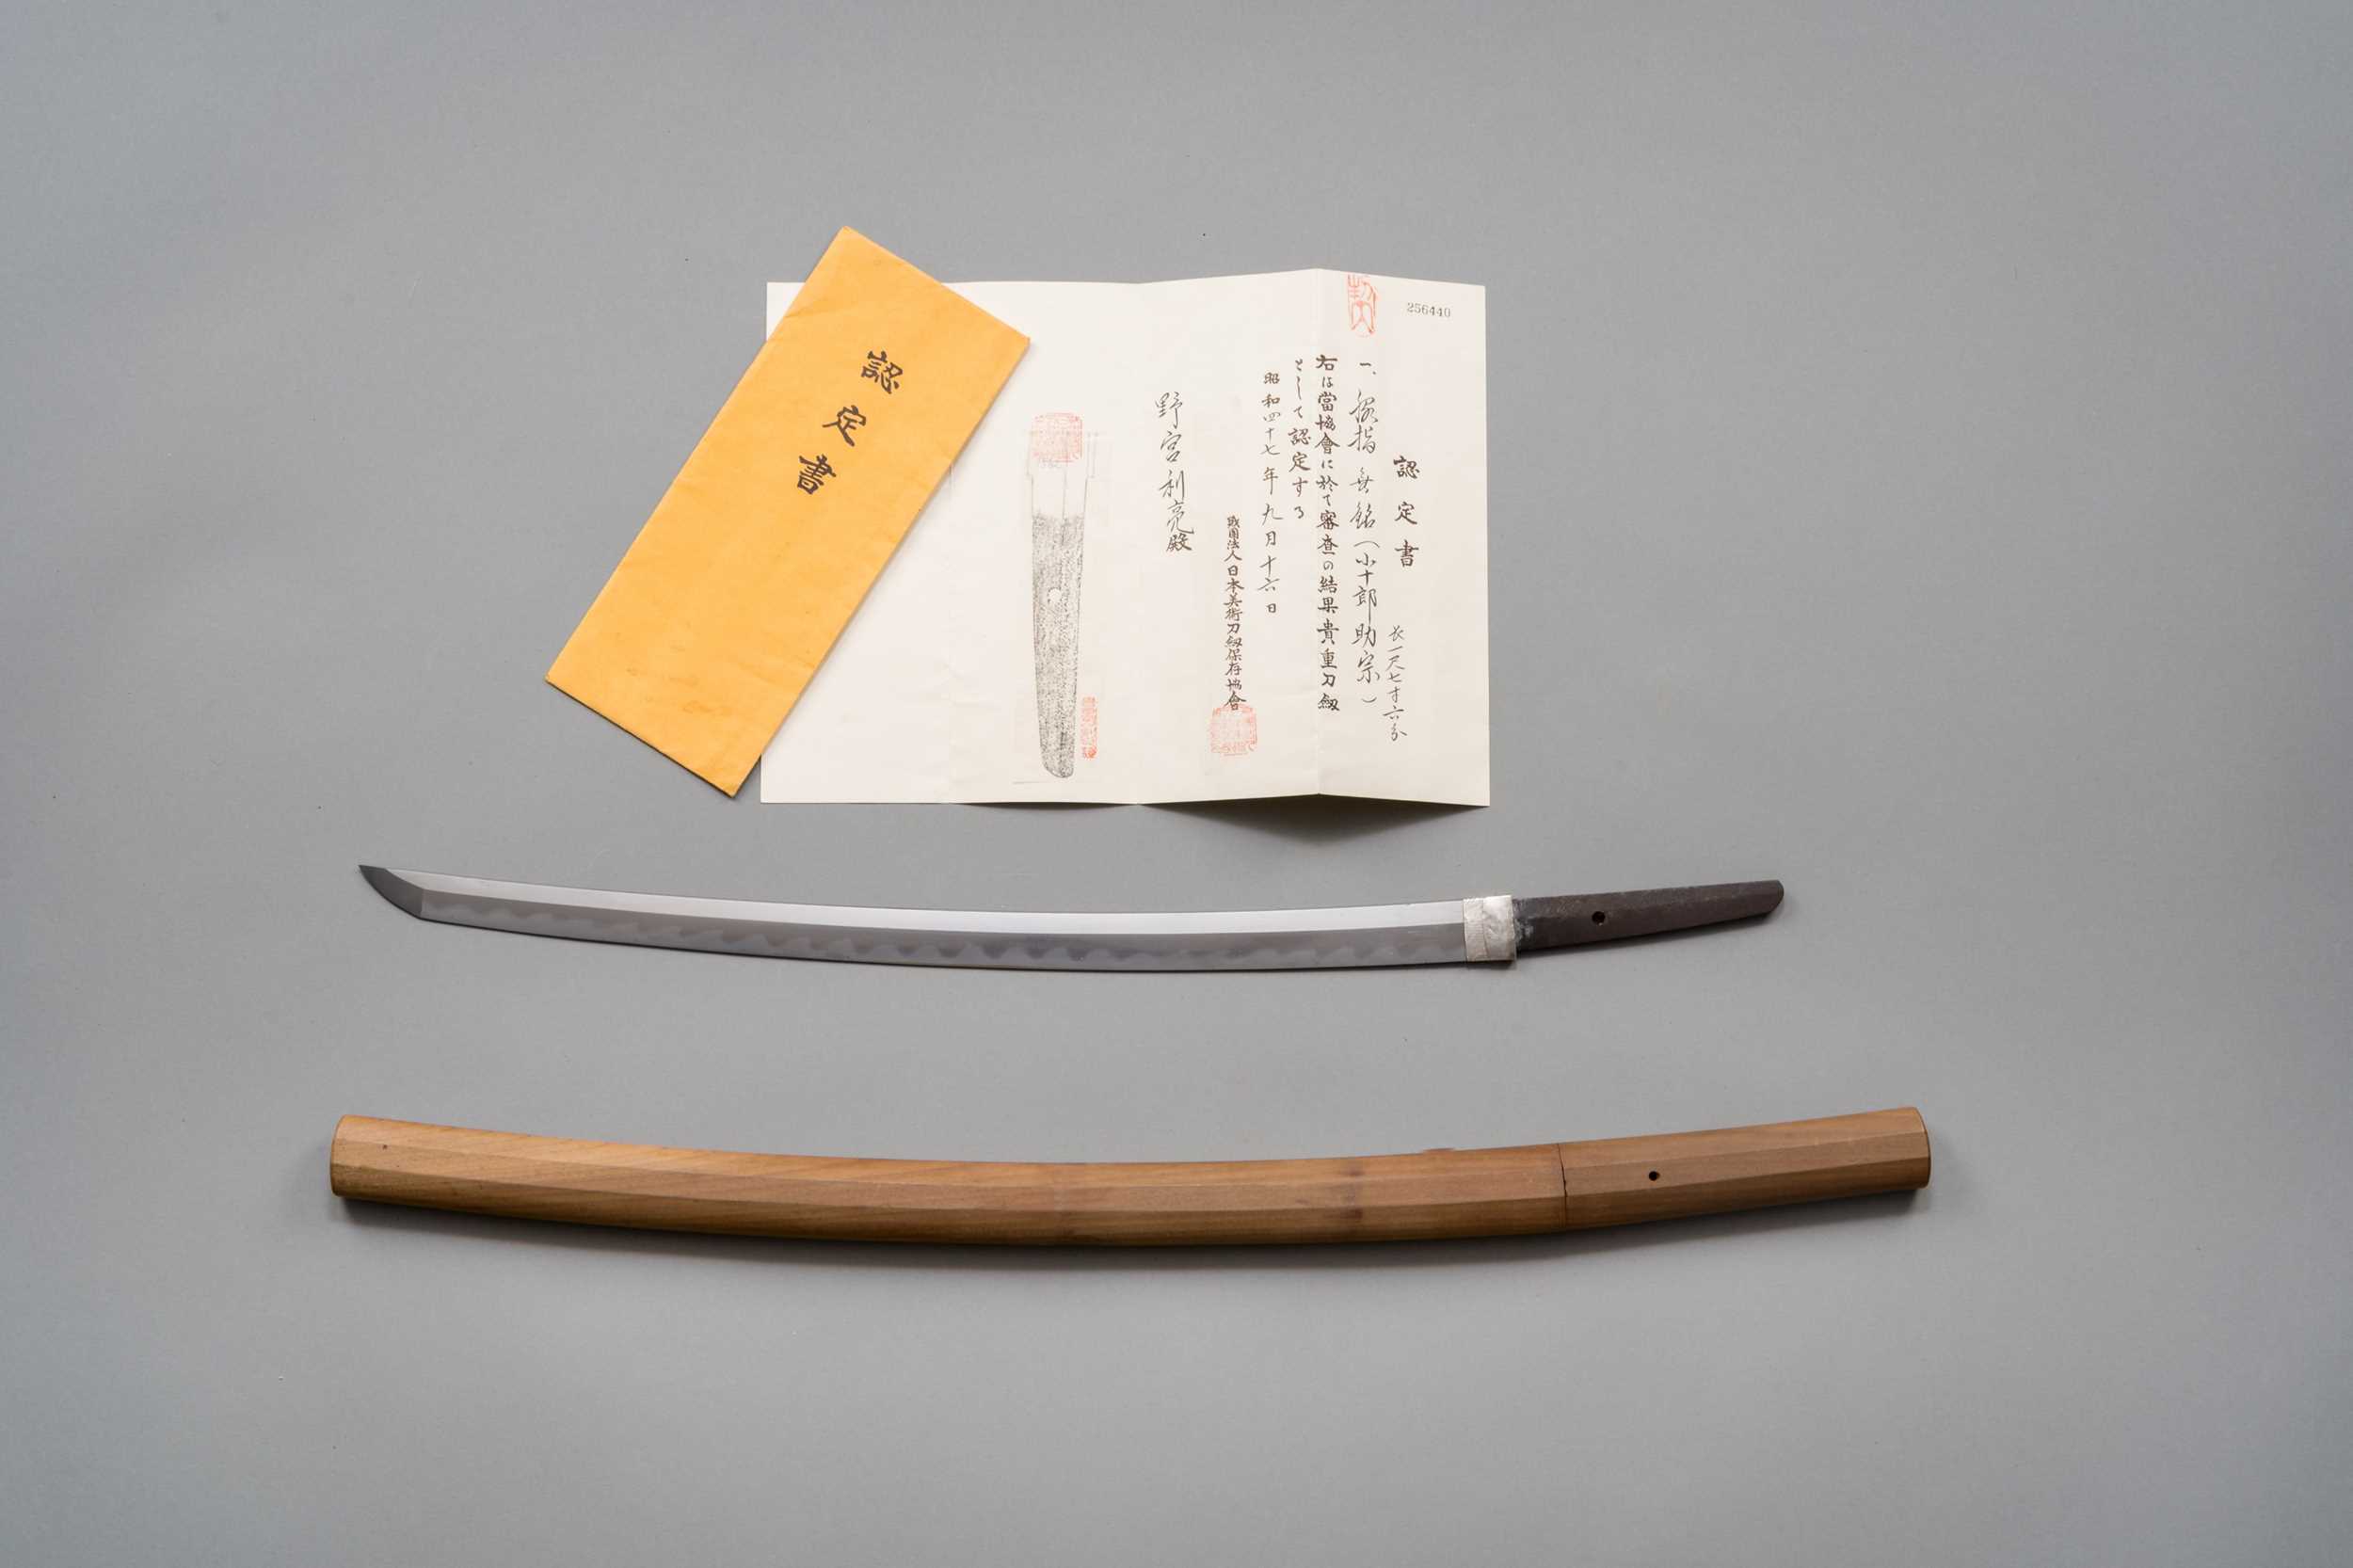 KOJYURO SUKEMUNE: A WAKIZASHI IN SHIRASAYA WITH NBTHK TOROKUSHO